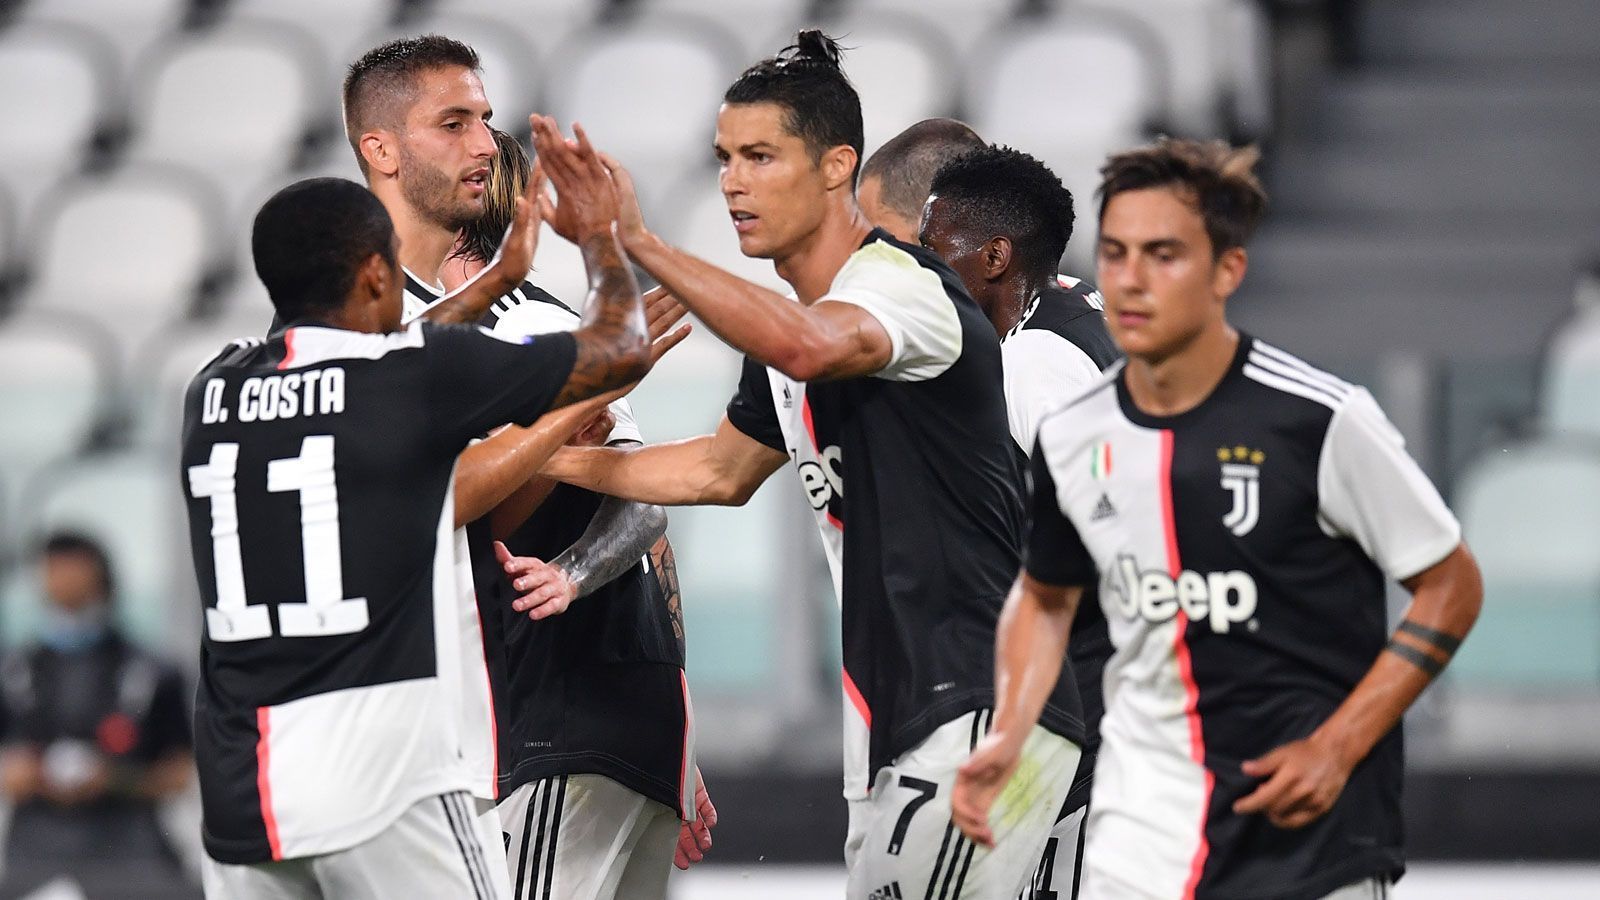 
                <strong>Platz 5: Juventus Turin</strong><br>
                 - Punkte 2015/16: 18,000 - Punkte 2016/17: 33,000 - Punkte 2017/18: 23,000 - Punkte 2018/19: 21,000 - Punkte 2019/20: 22,000 - Gesamtpunktzahl: 117,000
              